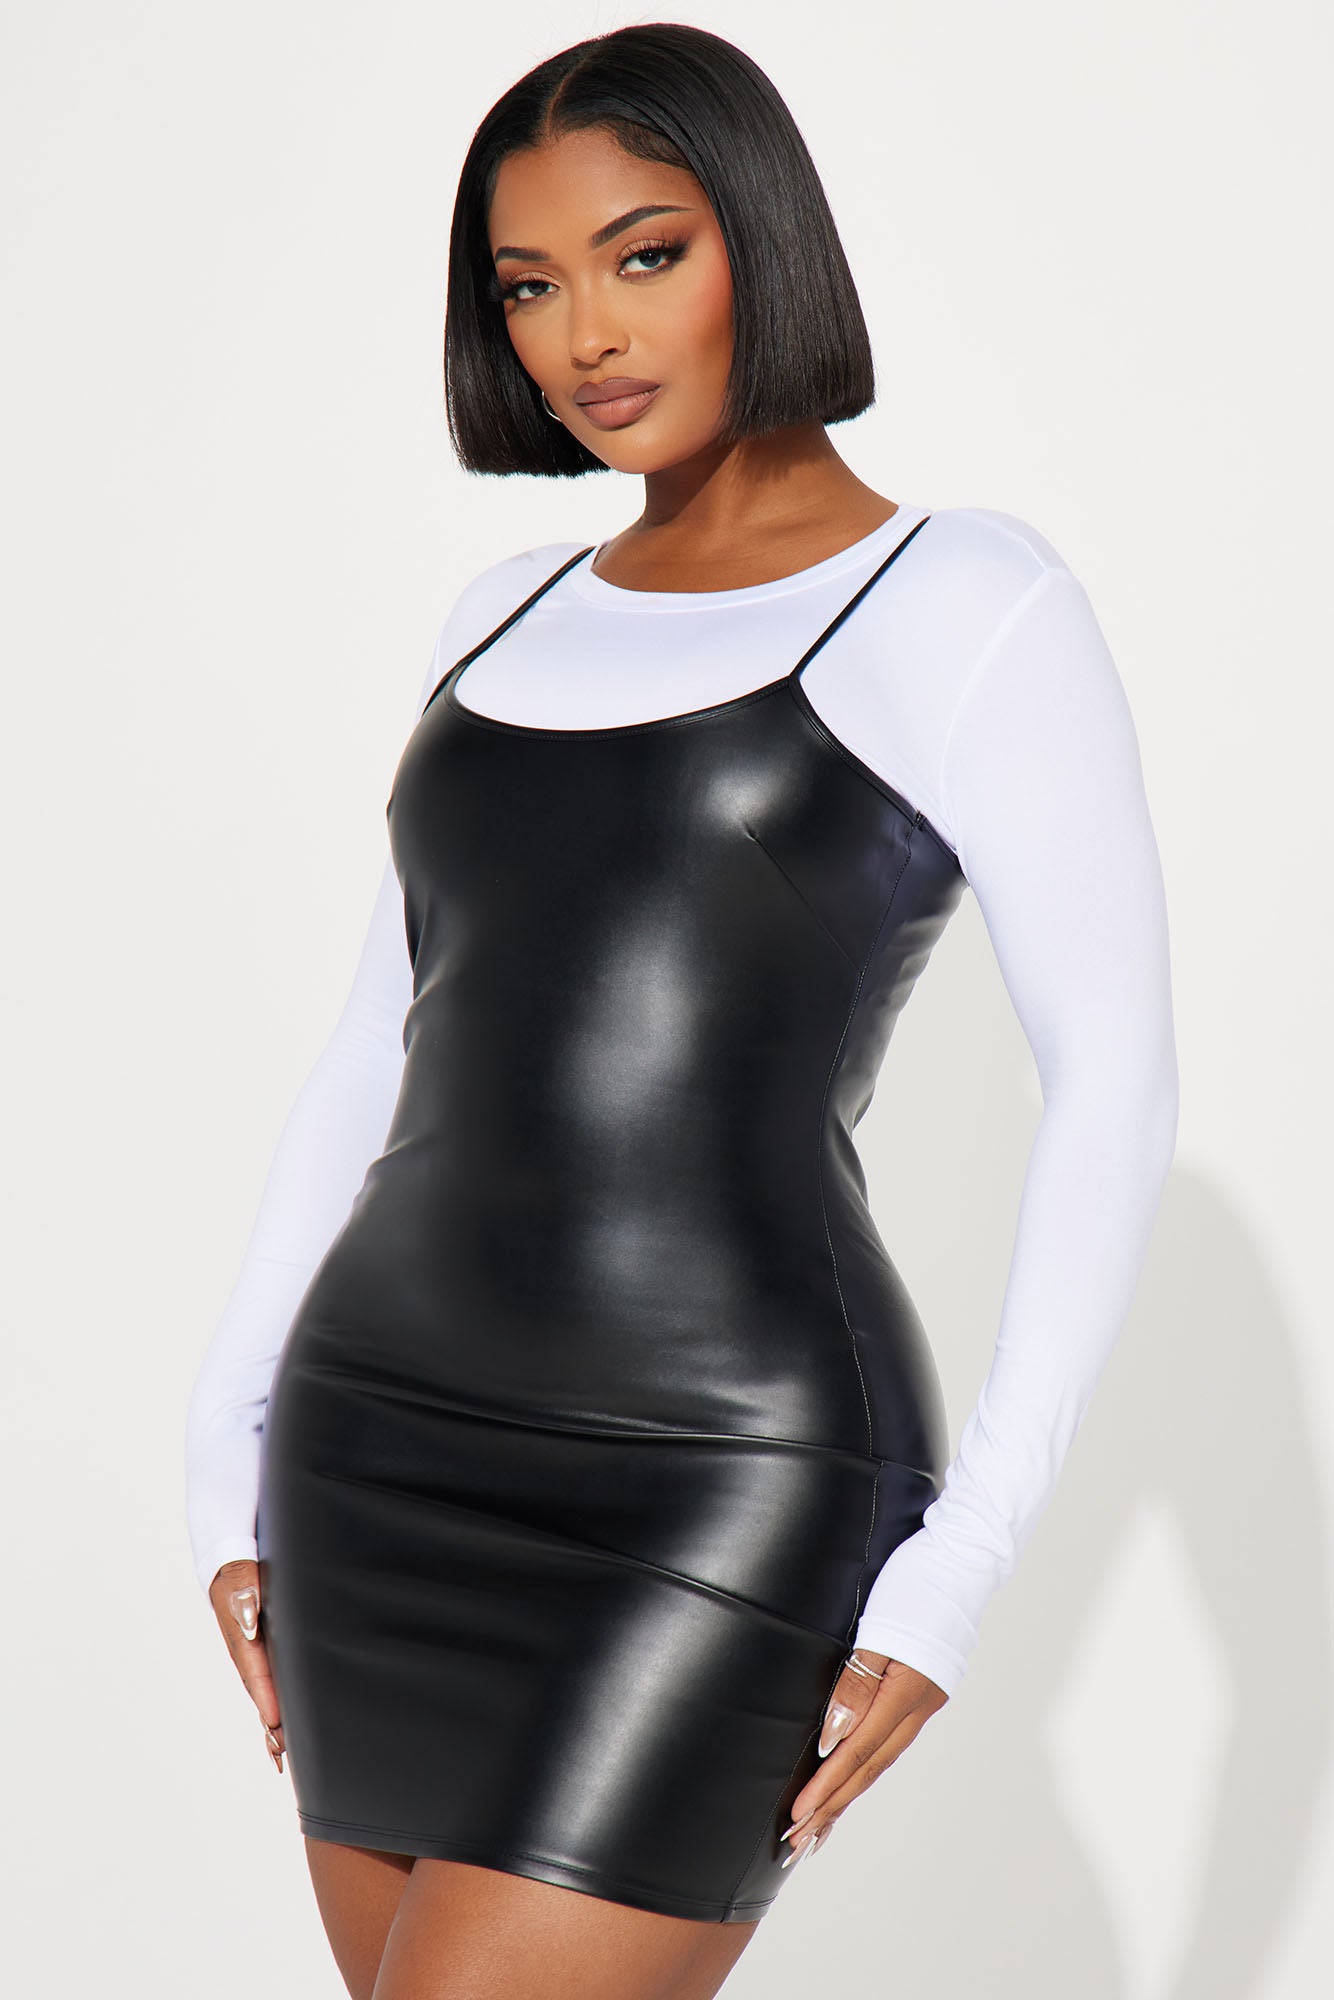 Bridgette Faux Leather Dress Set - Black/White, Fashion Nova, Dresses